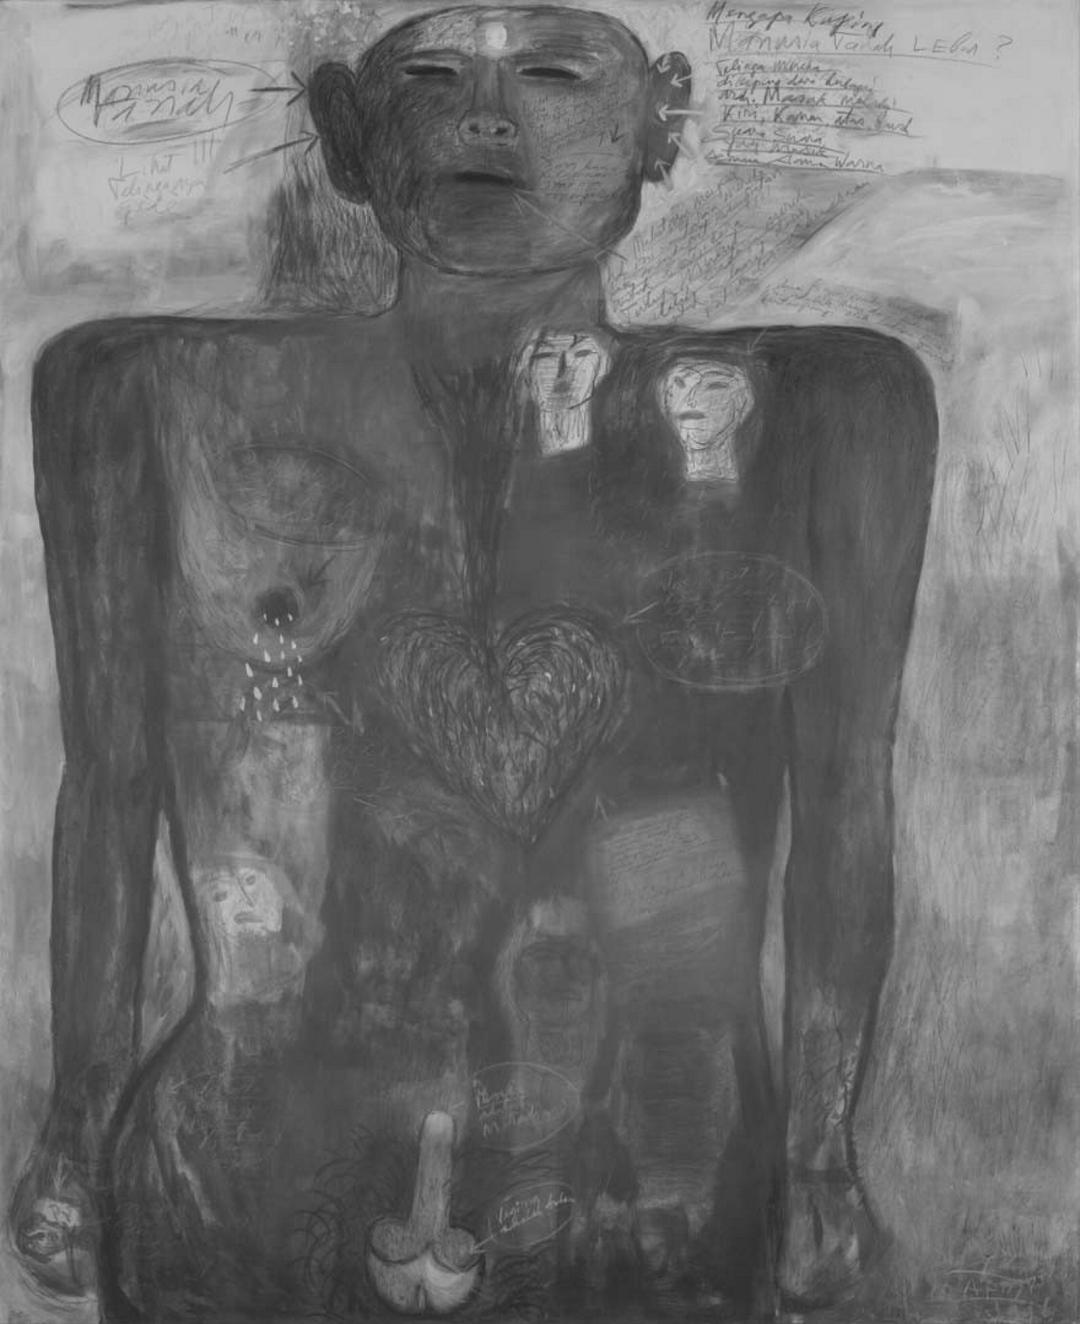 Slider: Near-infrared, Manusia tanah (The earth human) 1996 CHRISTANTO, Dadang